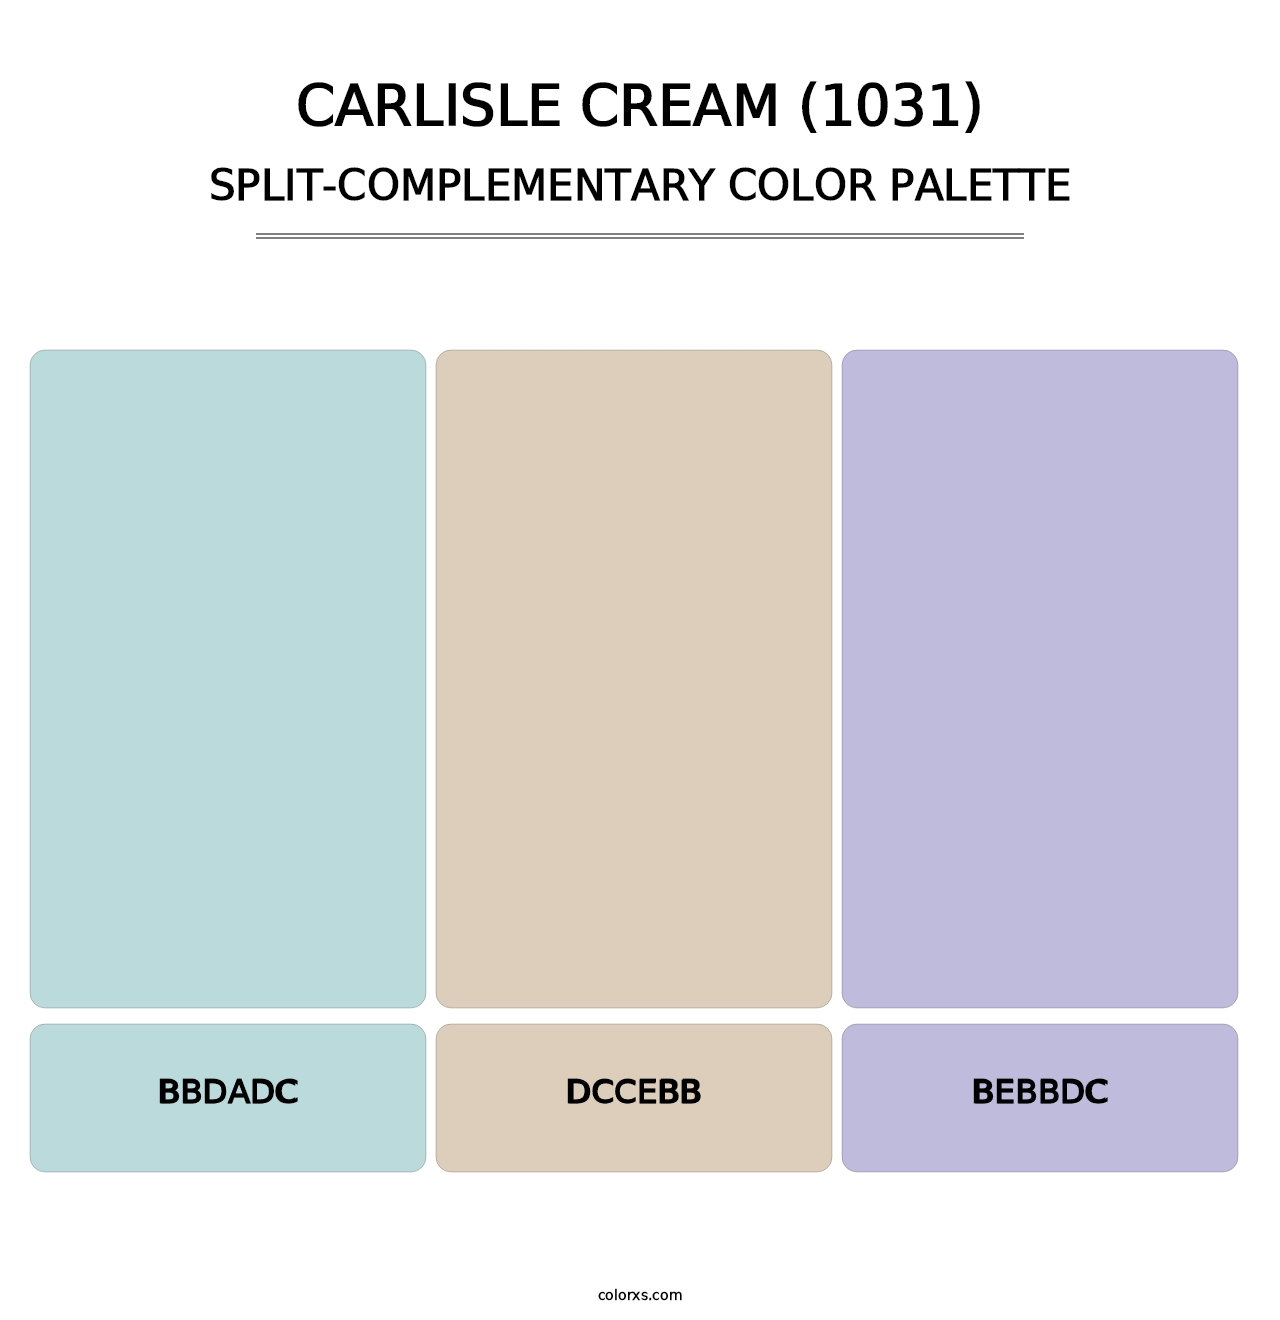 Carlisle Cream (1031) - Split-Complementary Color Palette